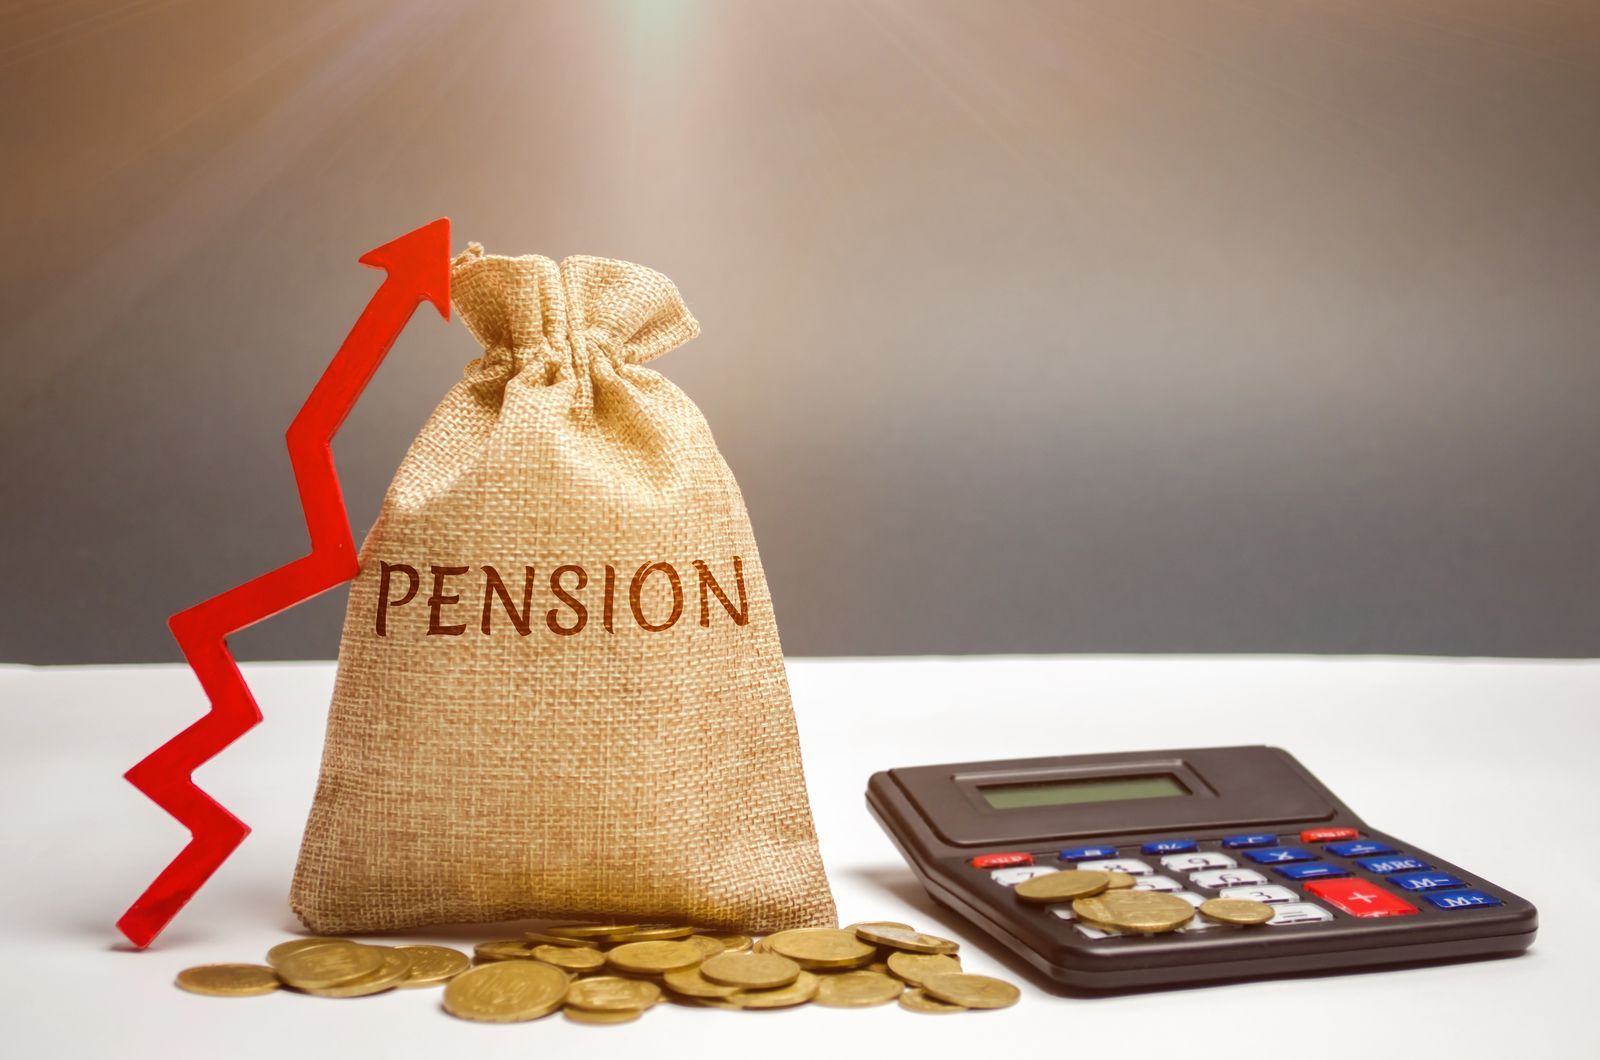 Ahorro pensional creció $317,9 billones iniciando el año